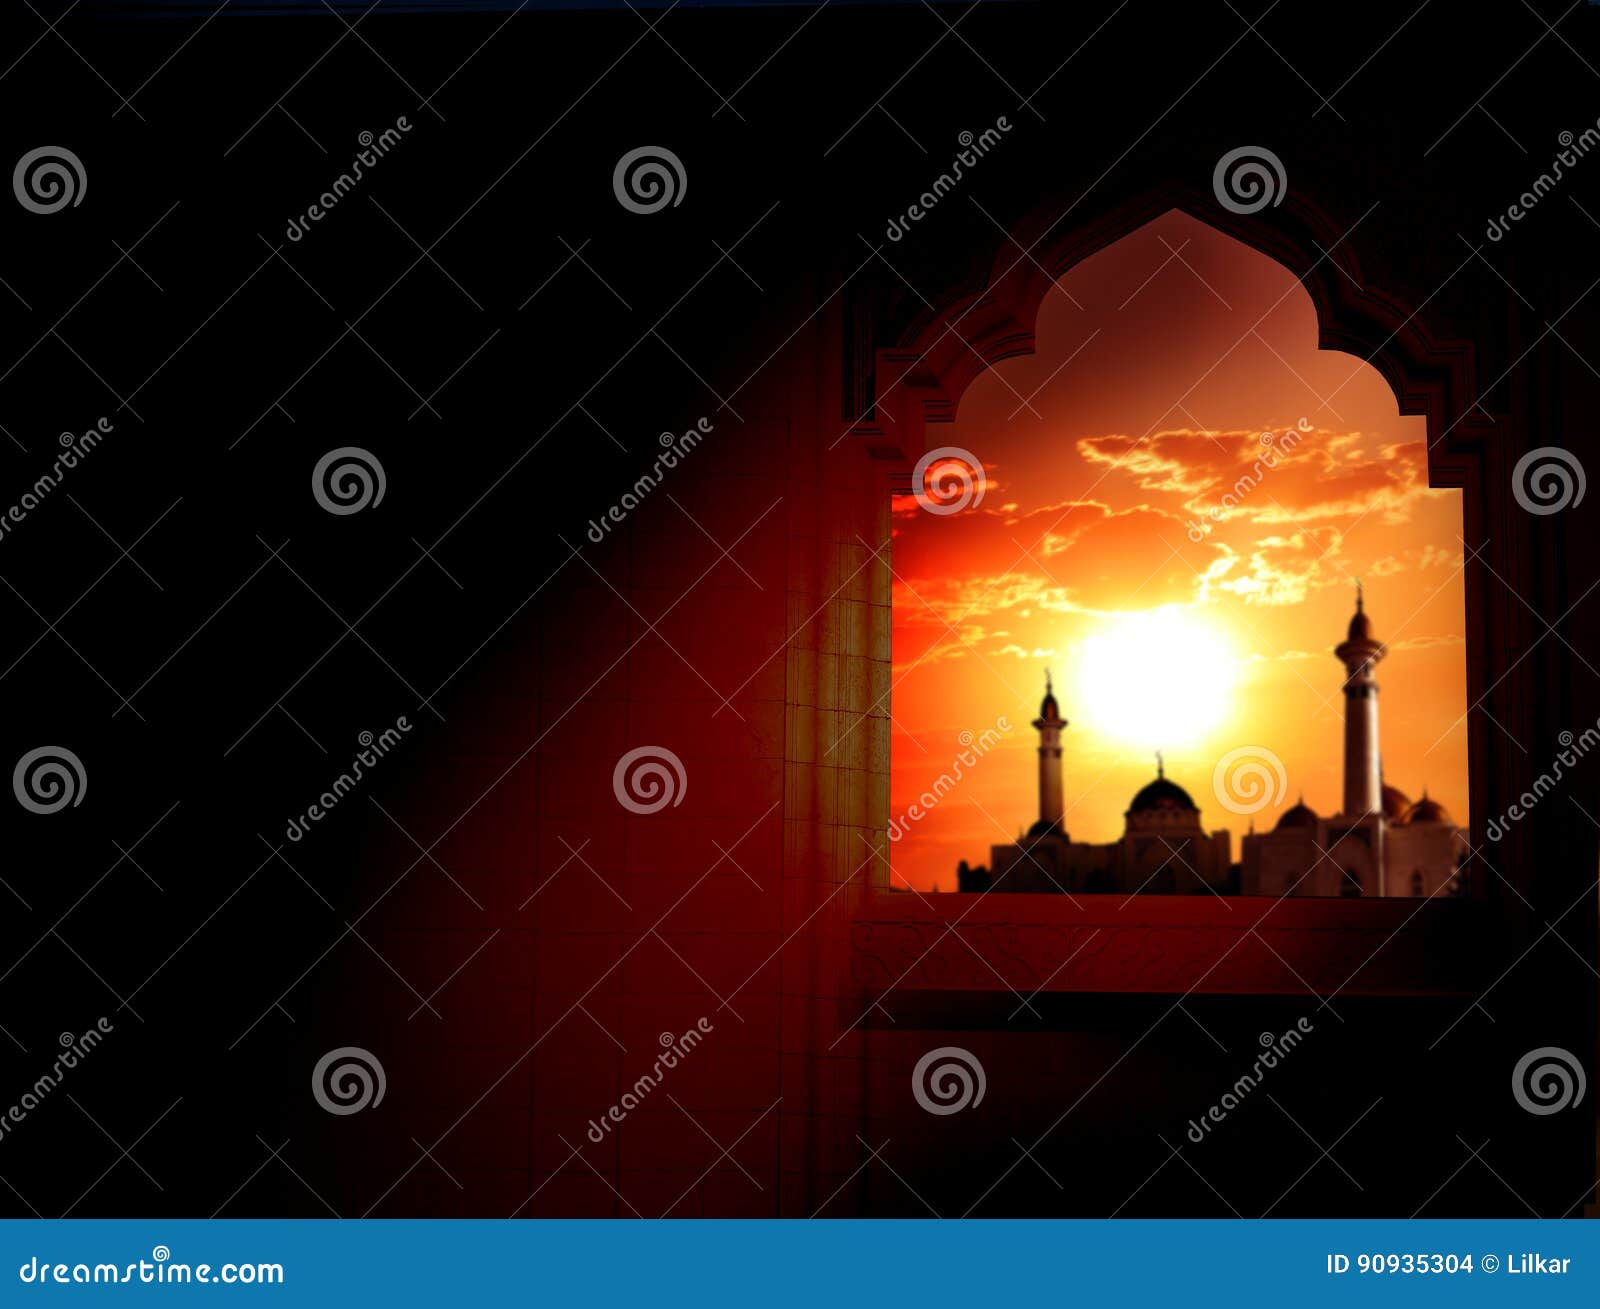 ramadan kareem background.